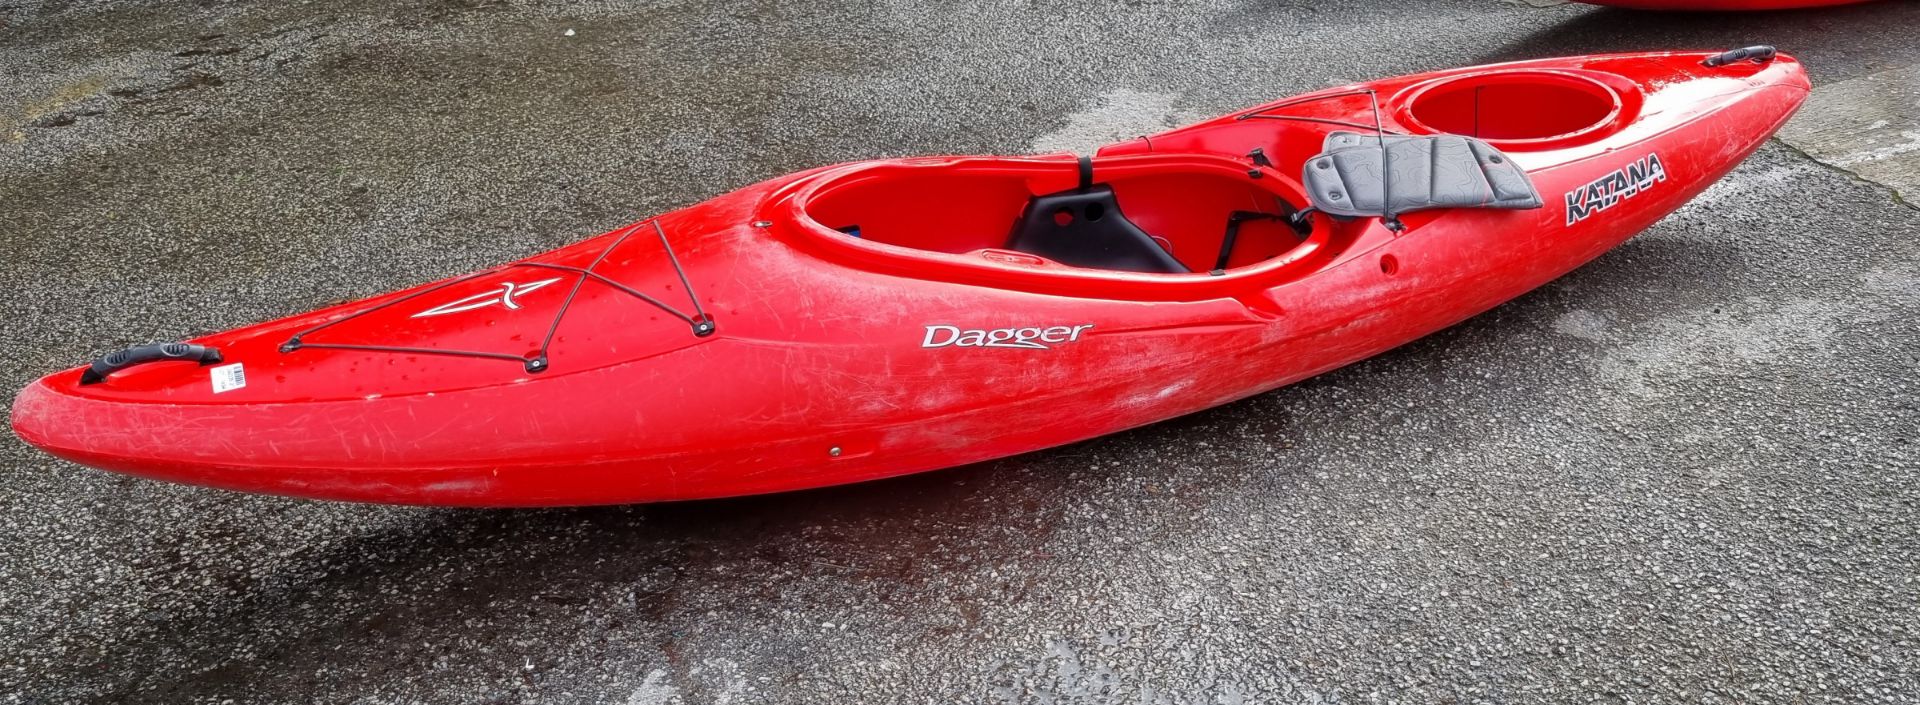 Dagger Katana polyethylene kayak - red - W 3200 x D 660 x H 420mm - Image 3 of 9